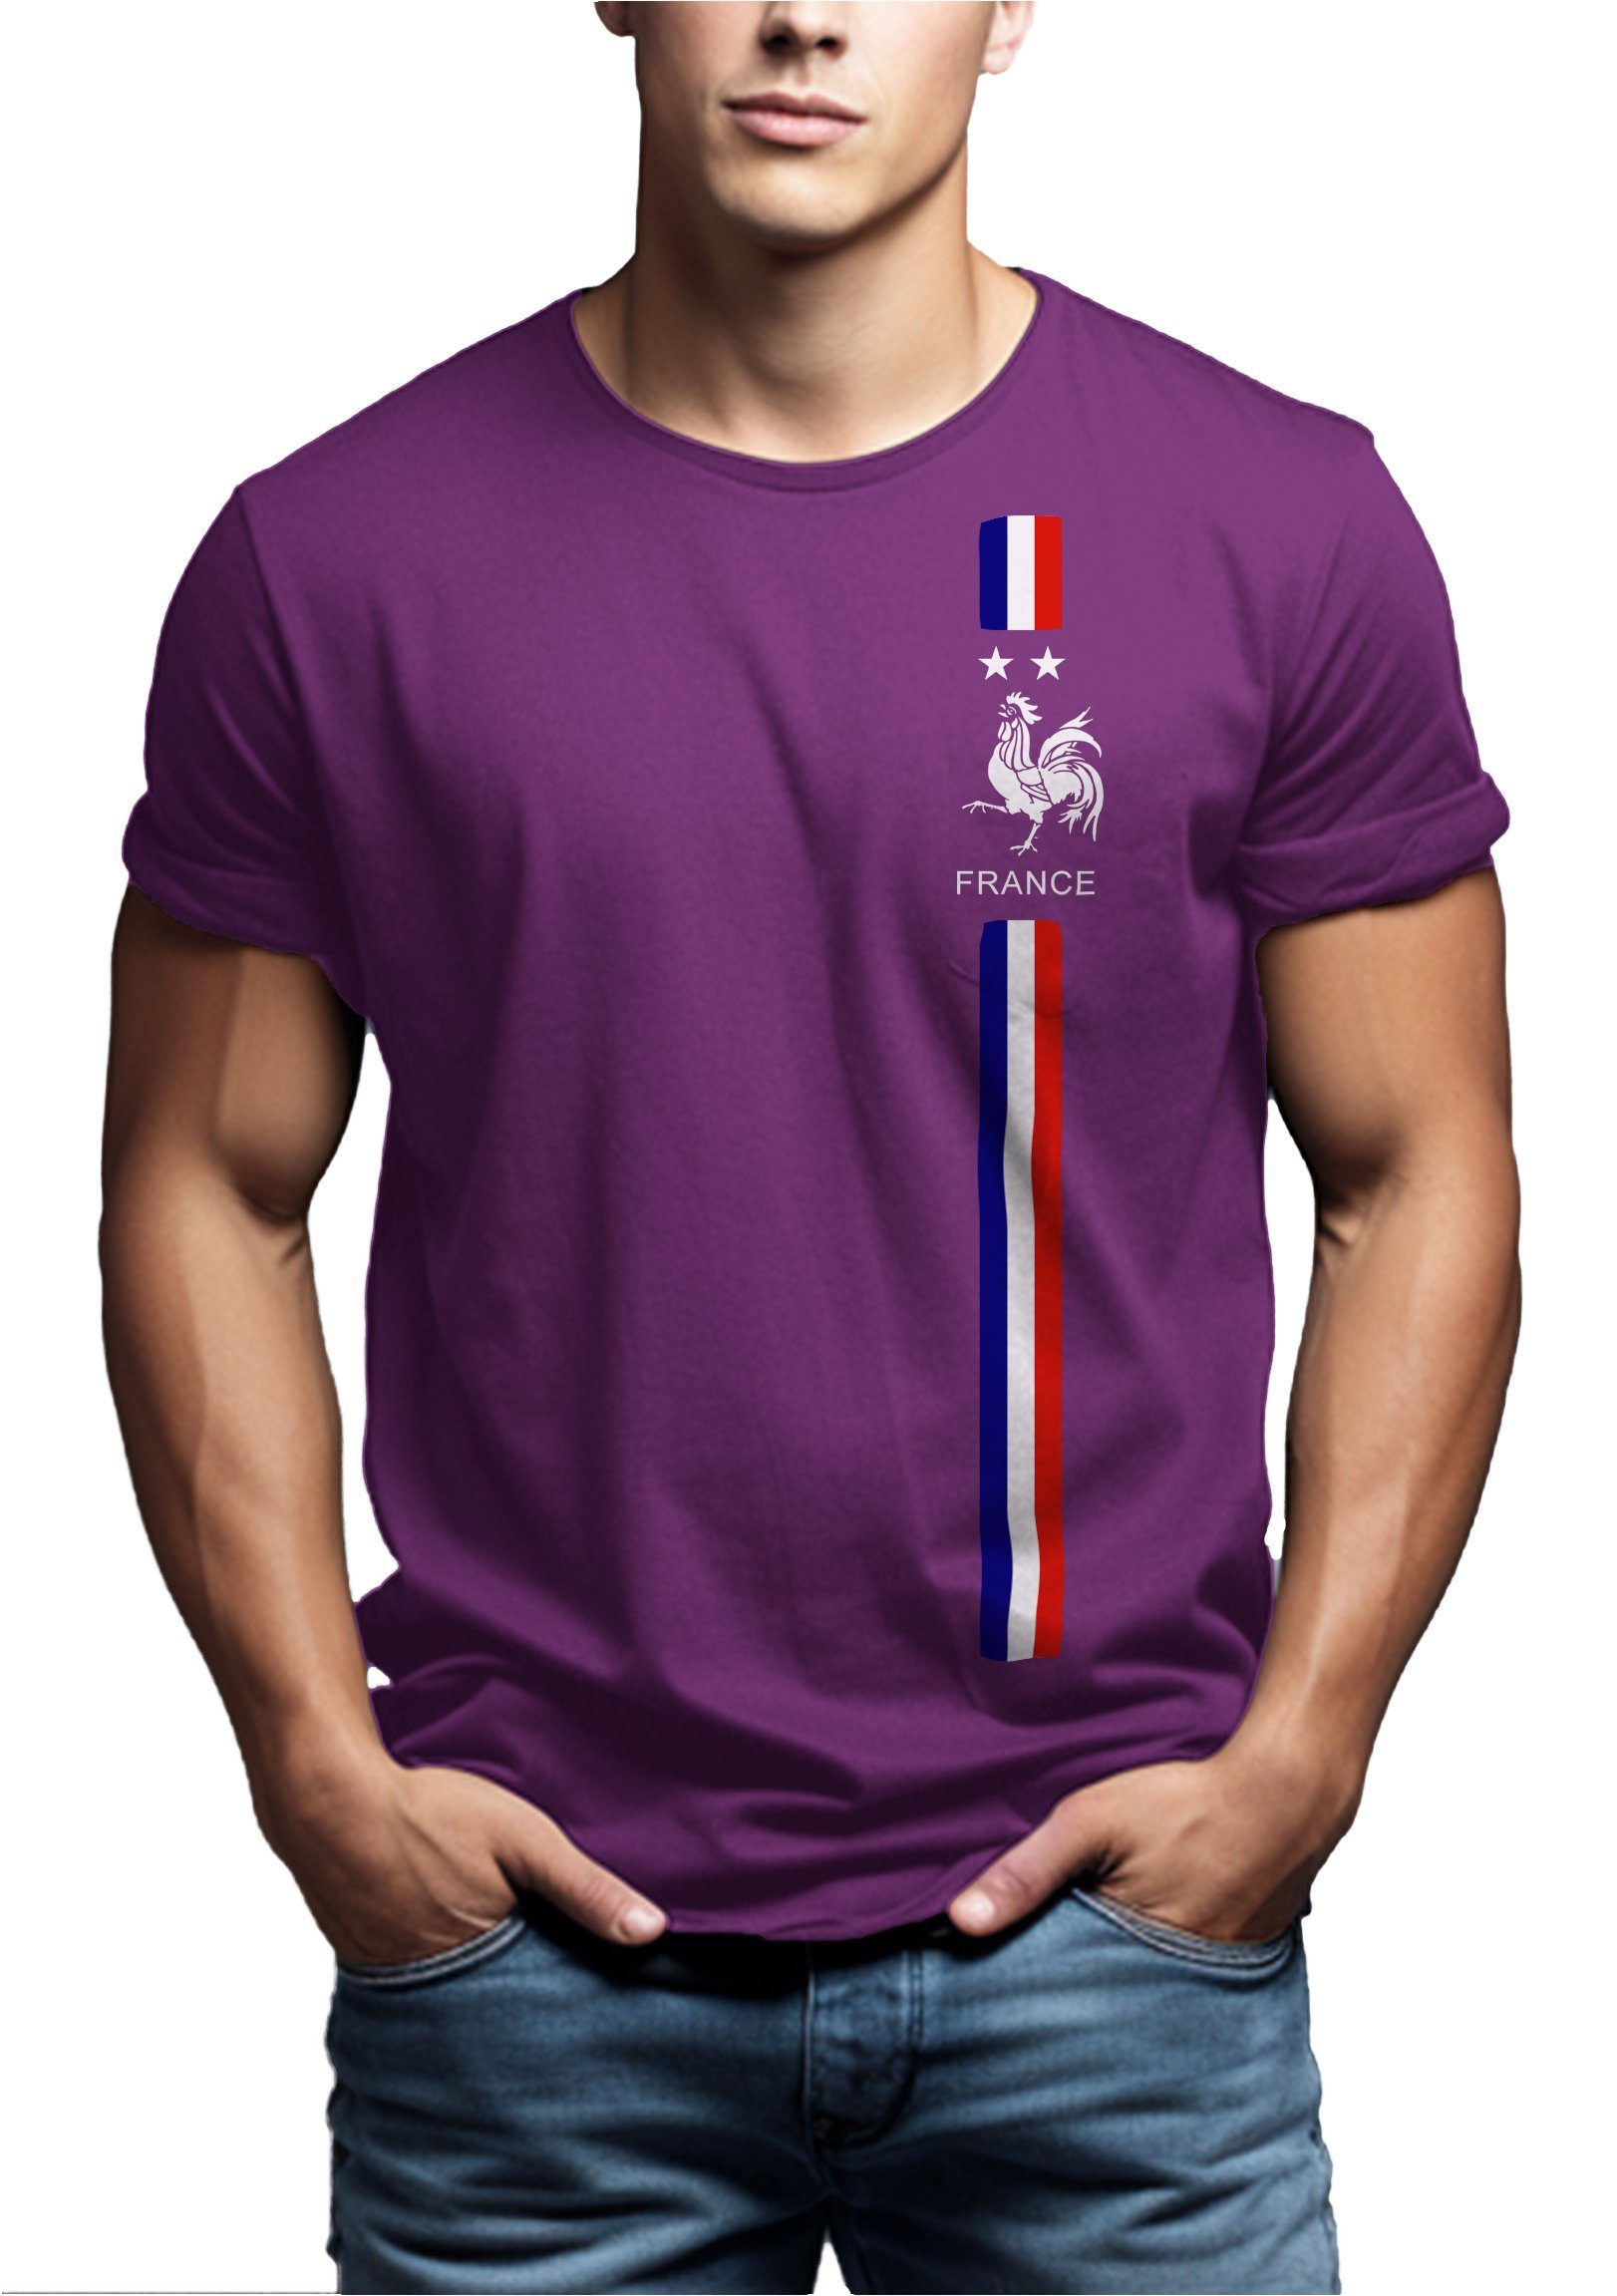 MAKAYA Print-Shirt Herren Fußball Trikot Fahne Männer Geschenke Frankreich Flagge Lila